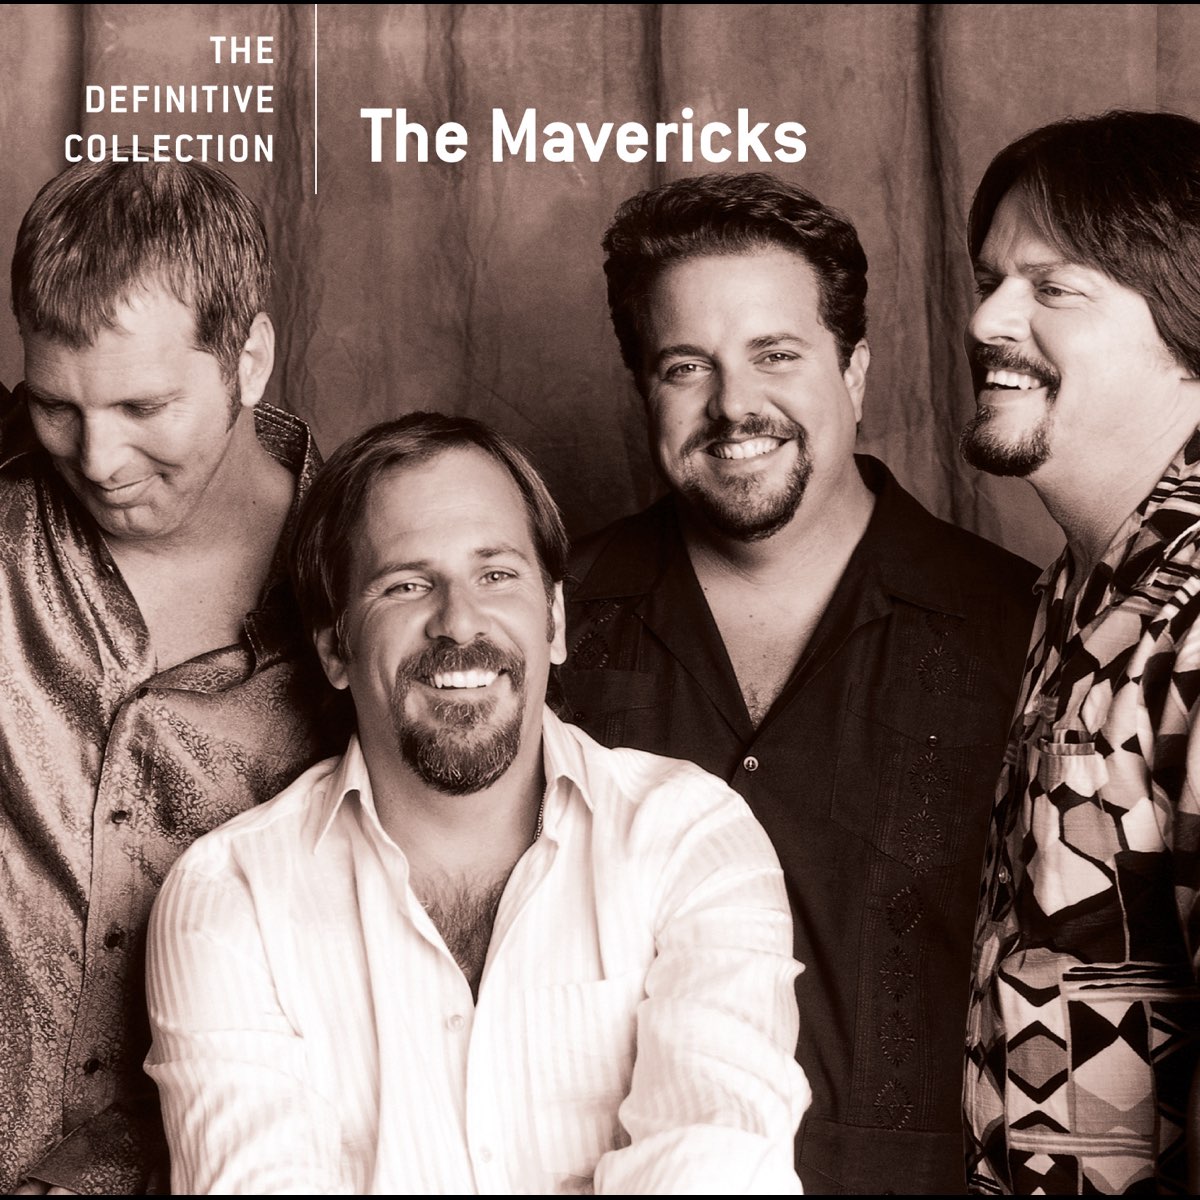 ‎The Mavericks The Definitive Collection by The Mavericks on Apple Music